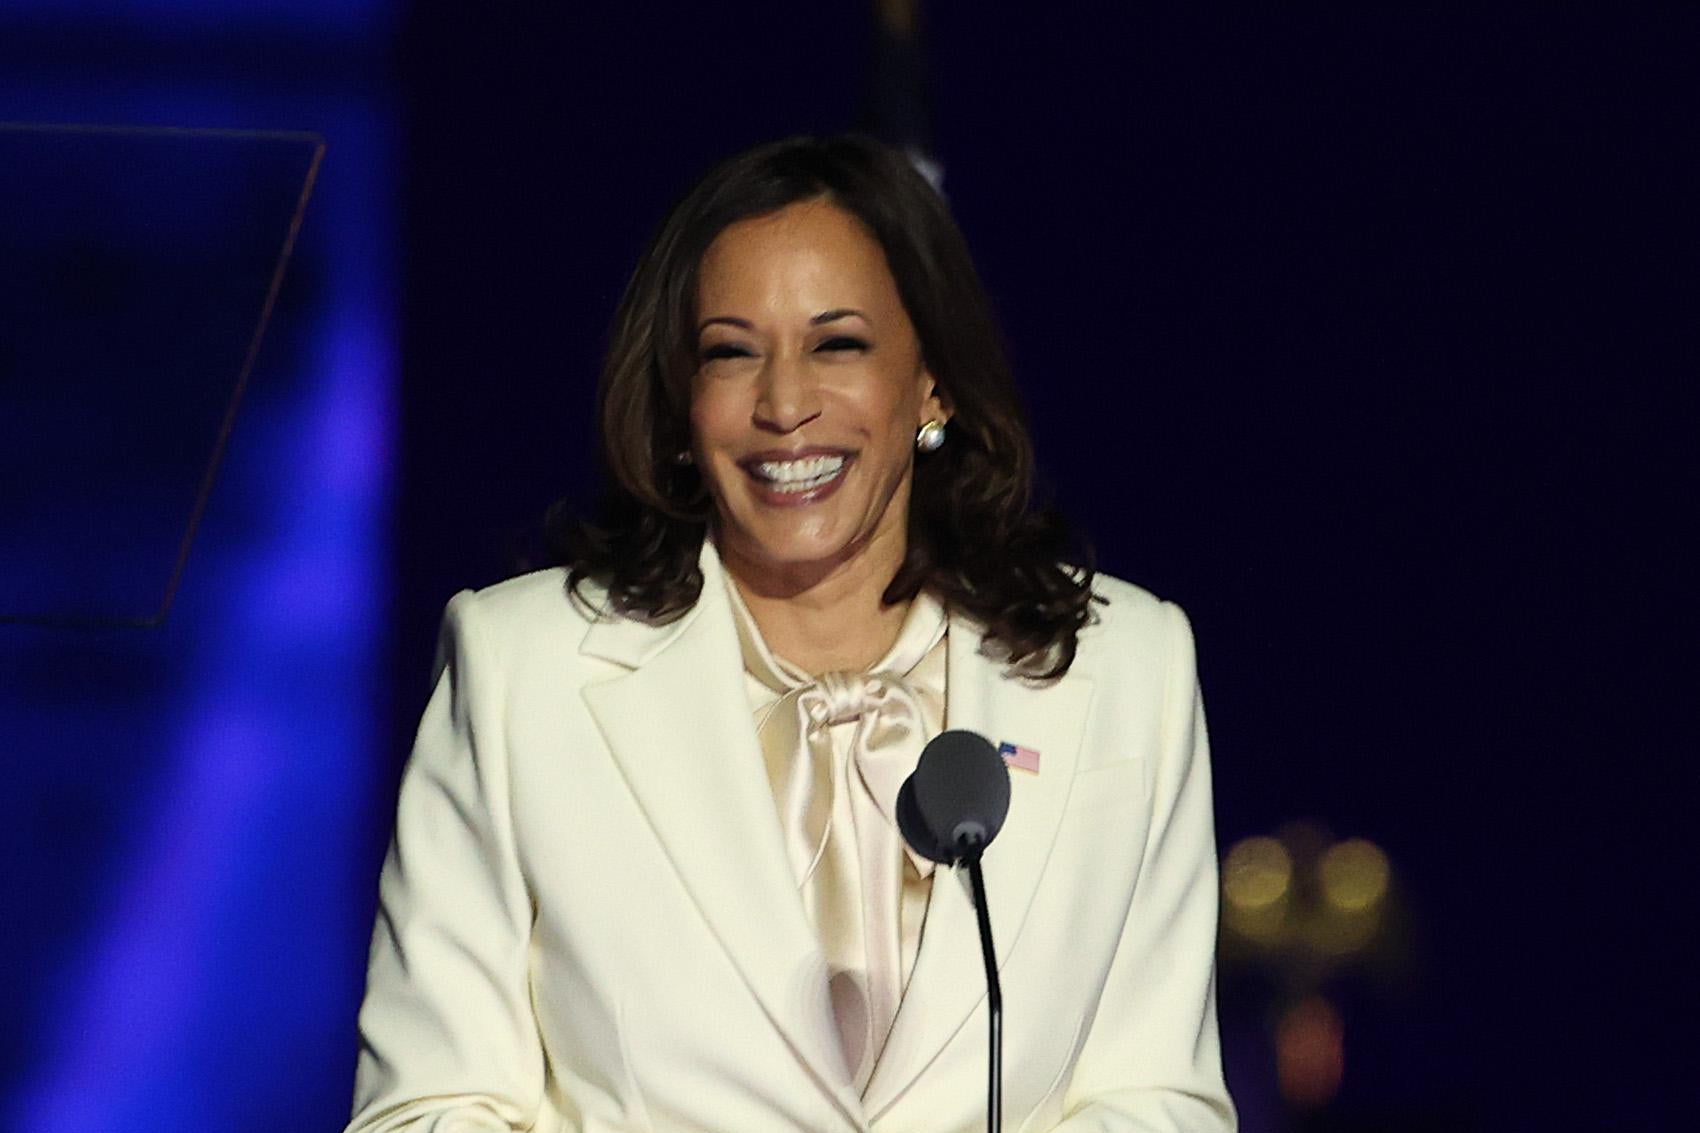 Kamala Harris, wearing a white pantsuit, grins onstage at a podium